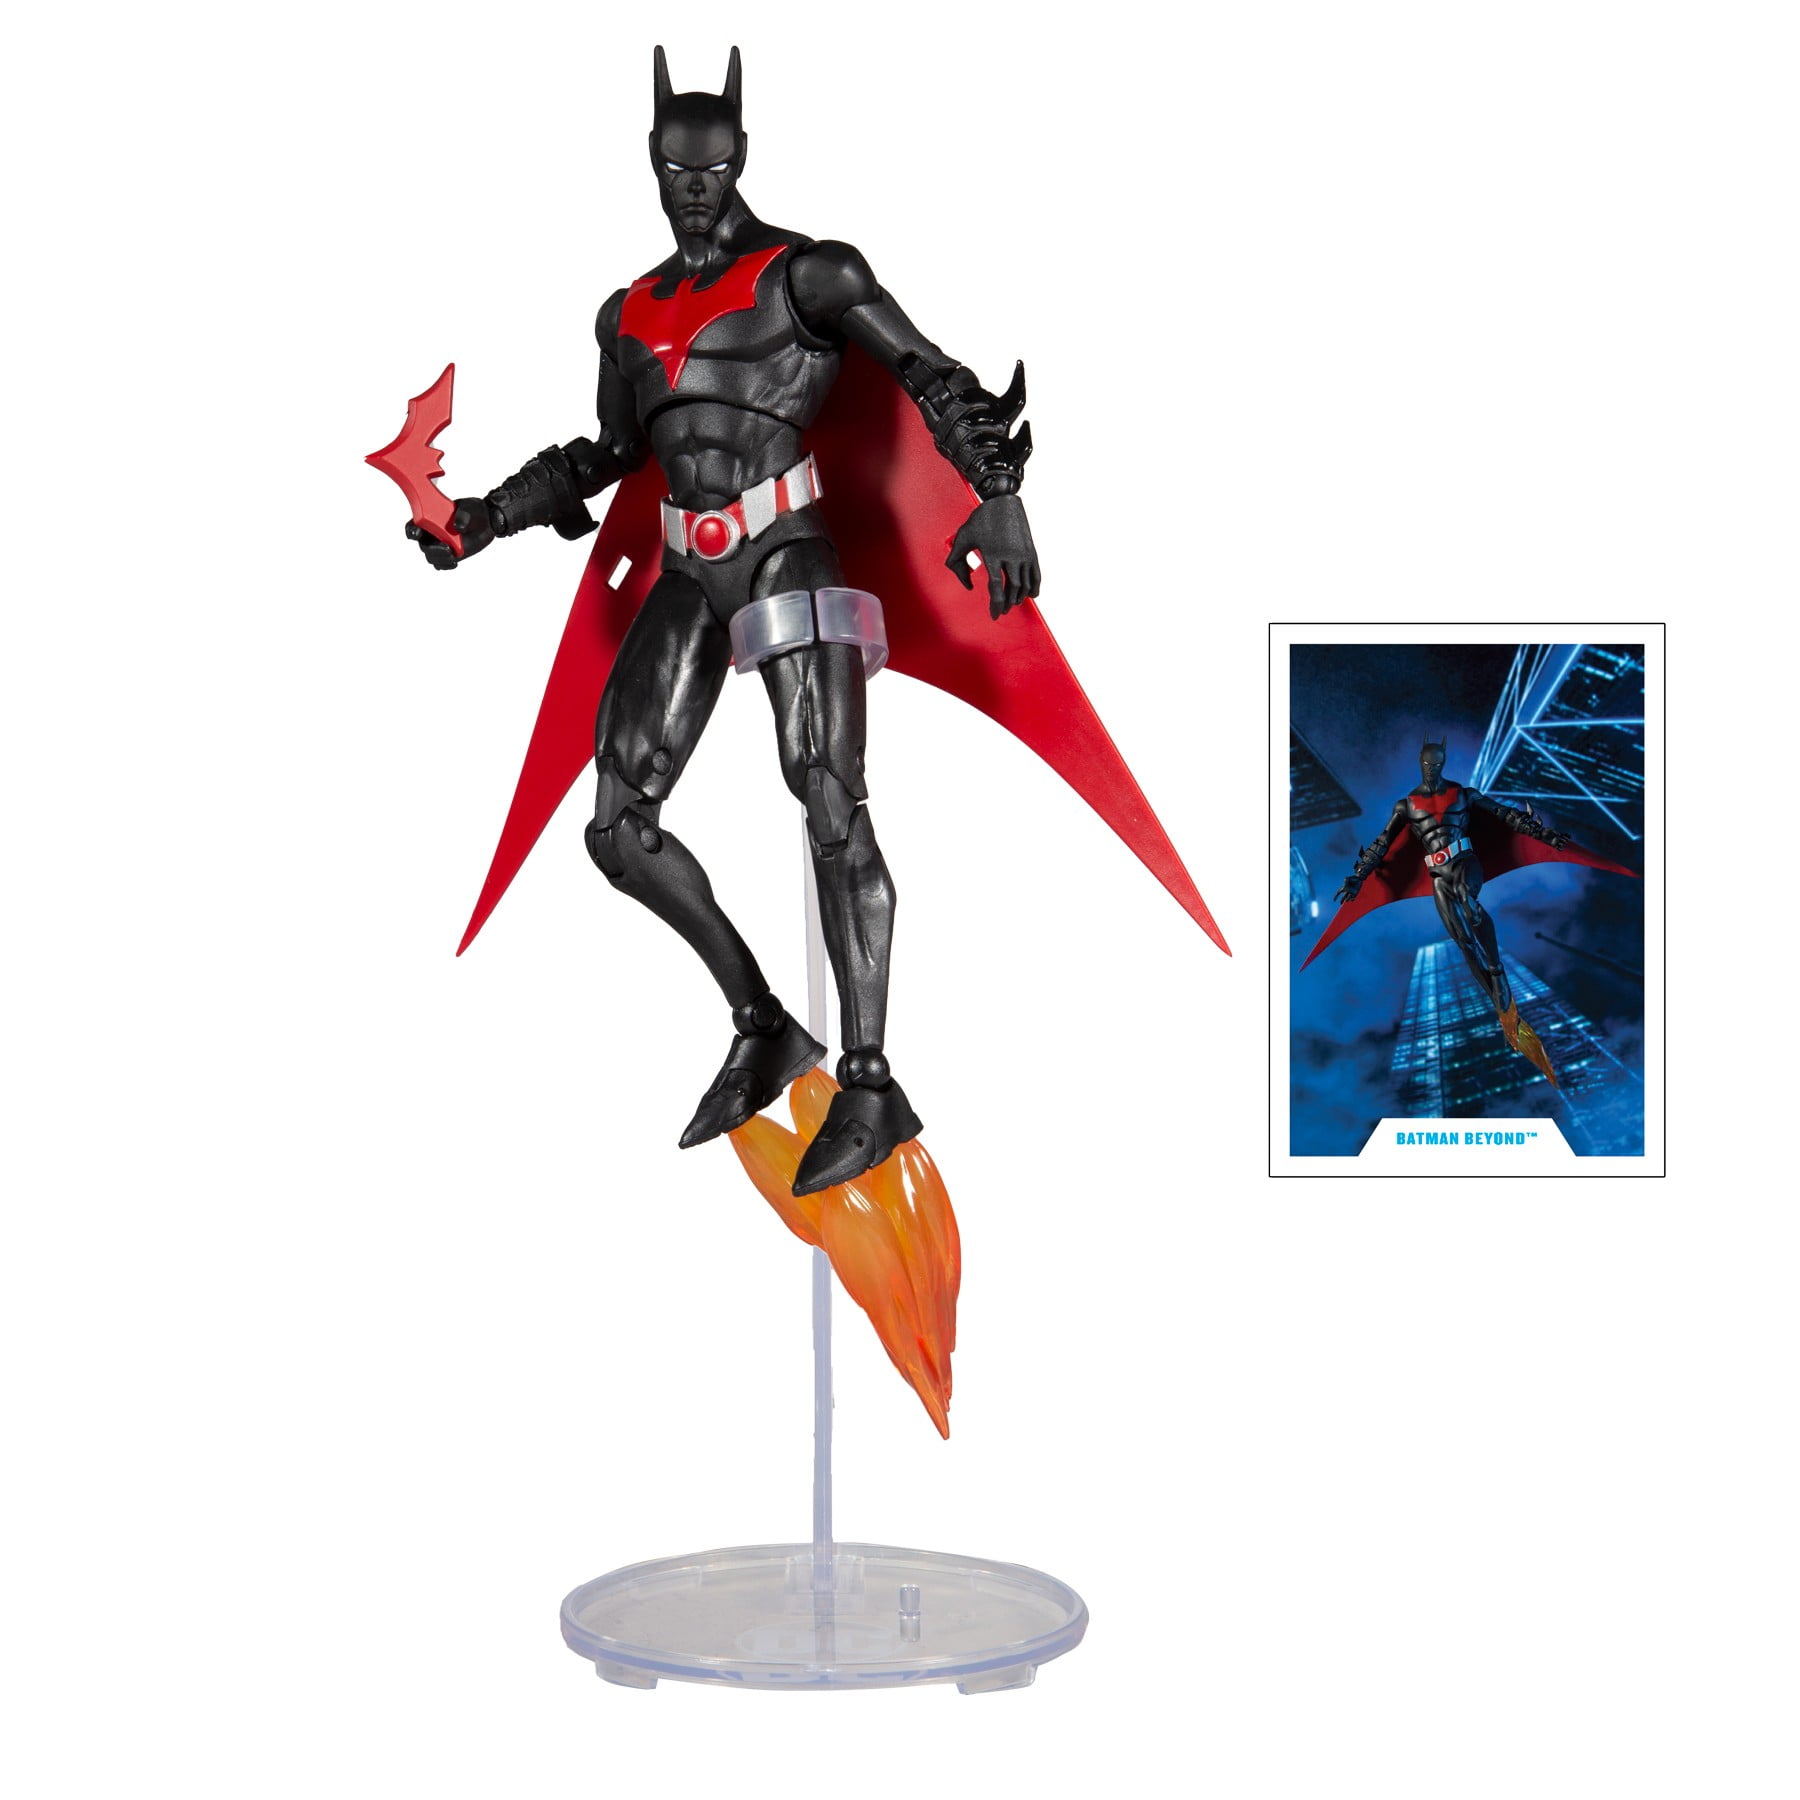 15751 McFarlane Multiverse Actionfigur Batman Batman Beyond 18 cm Mehrfarbig